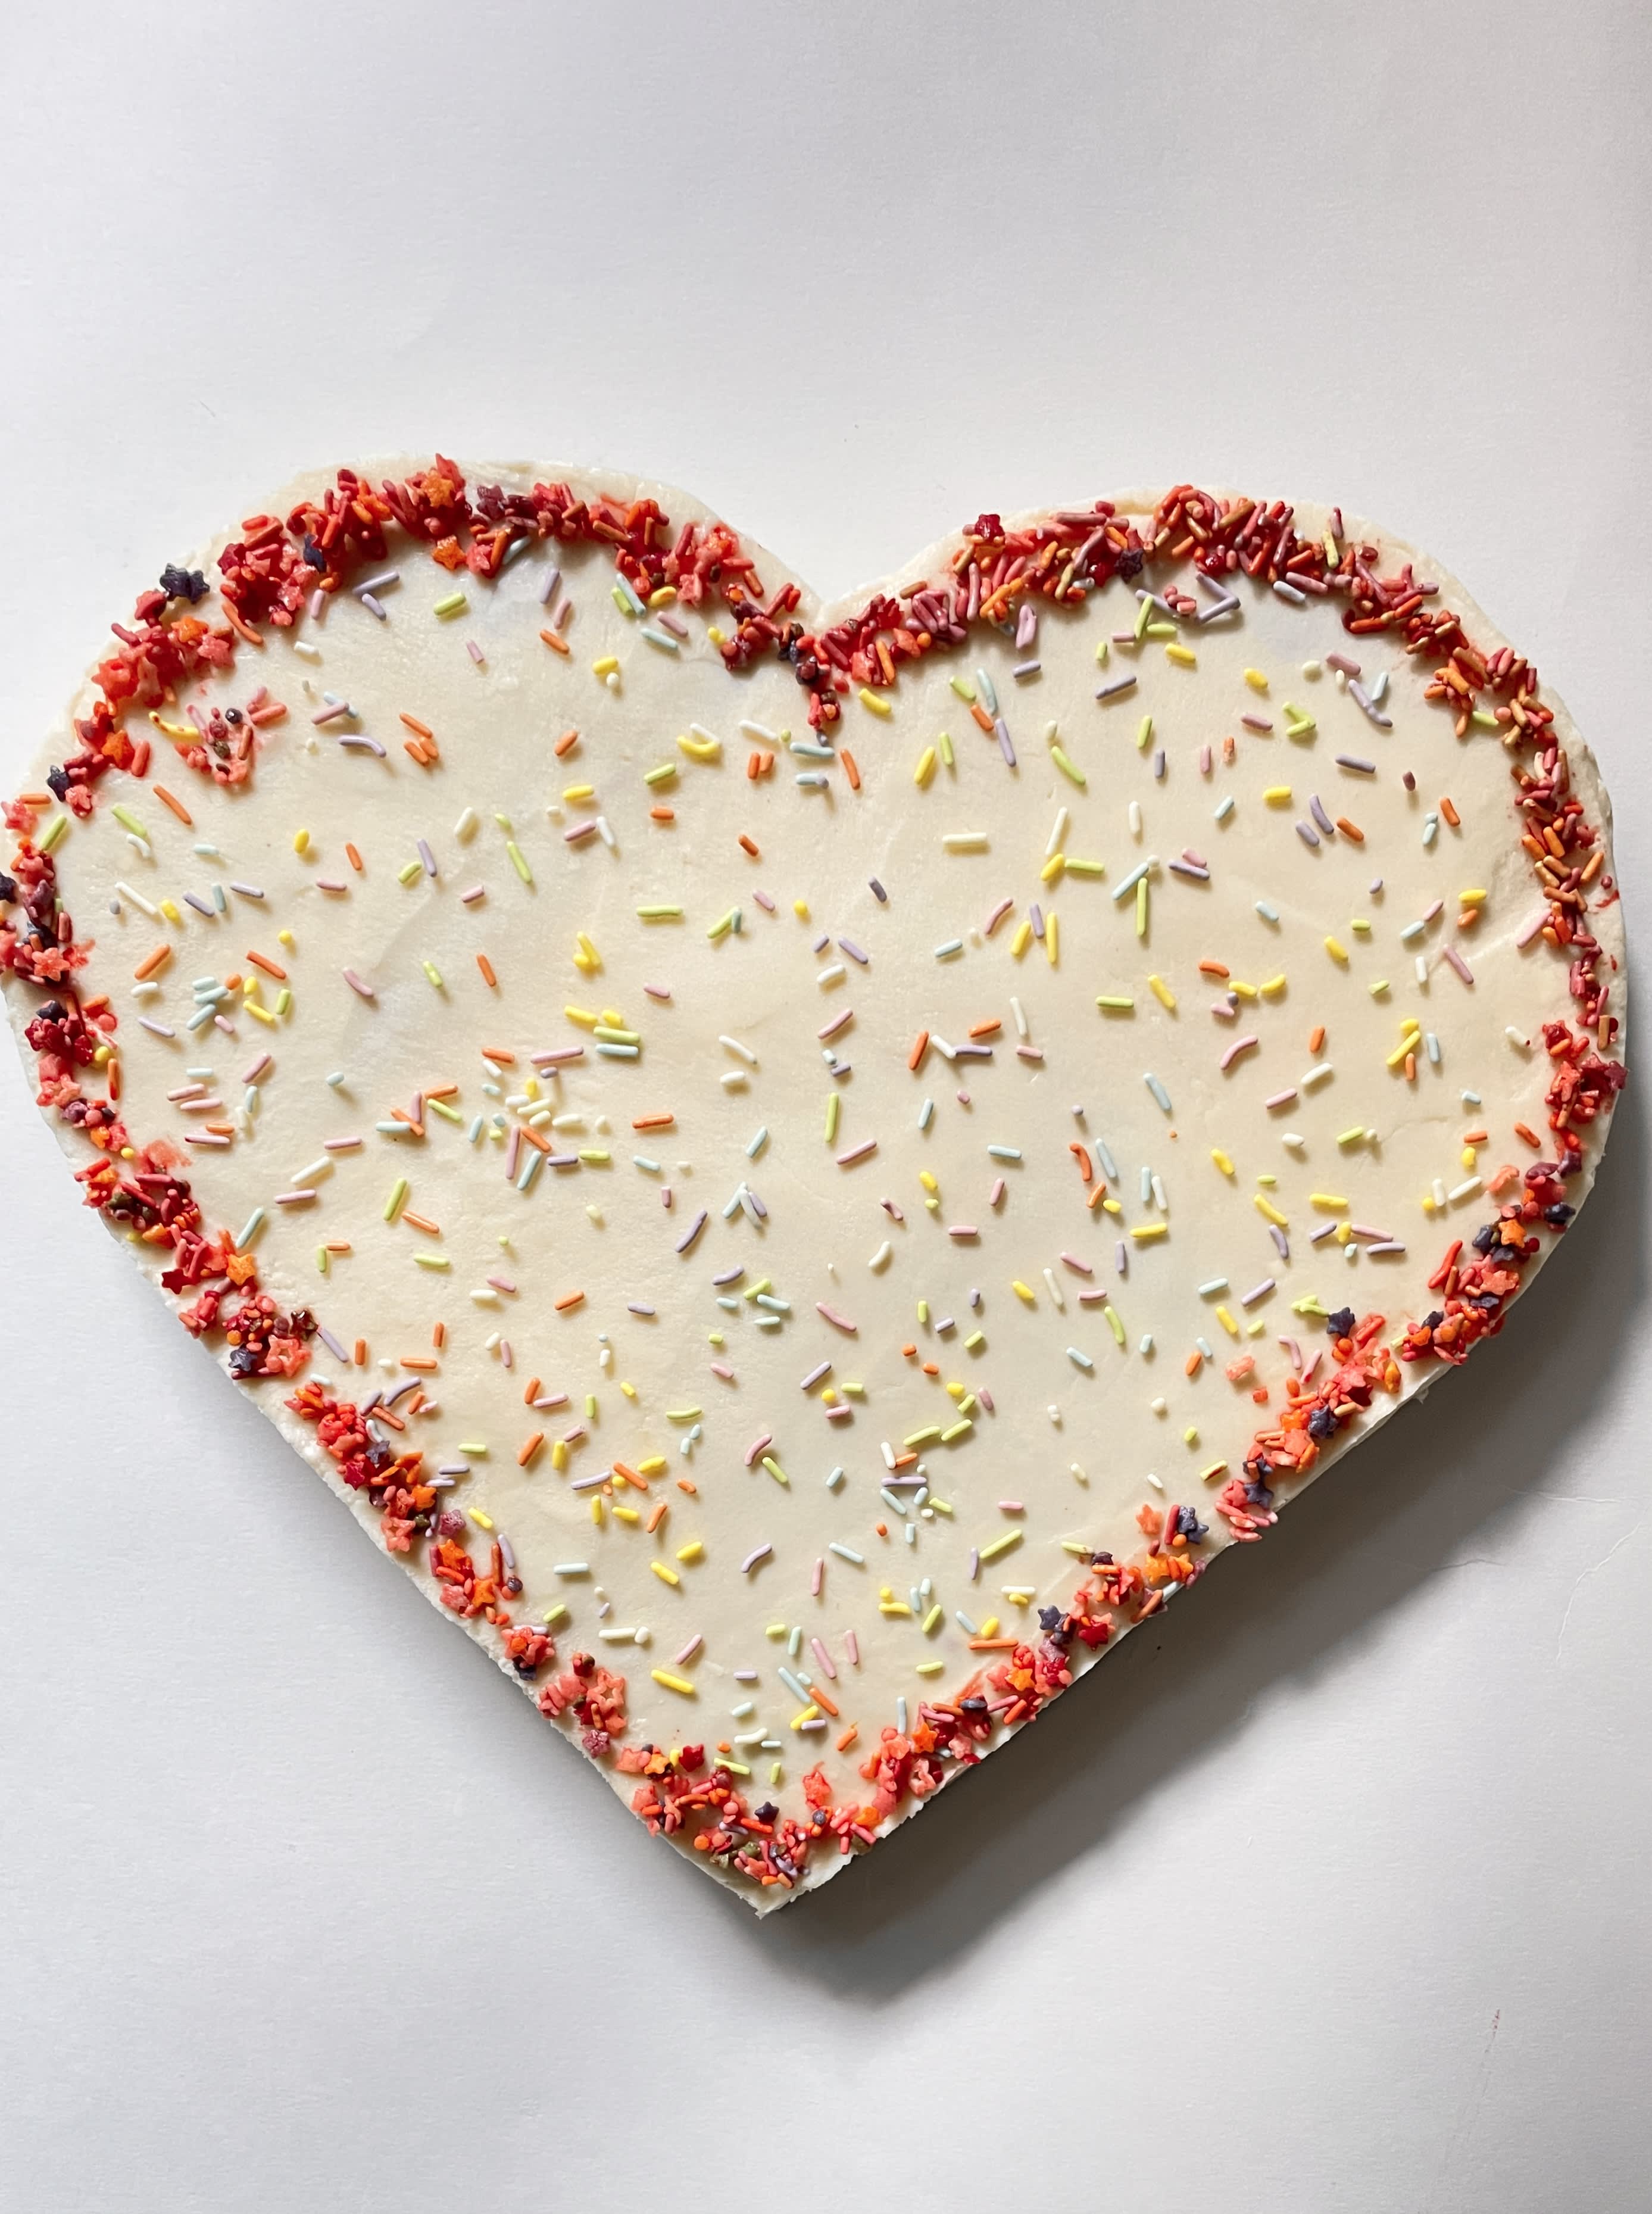 Mini Heart-Shaped Cakes - The BakerMama